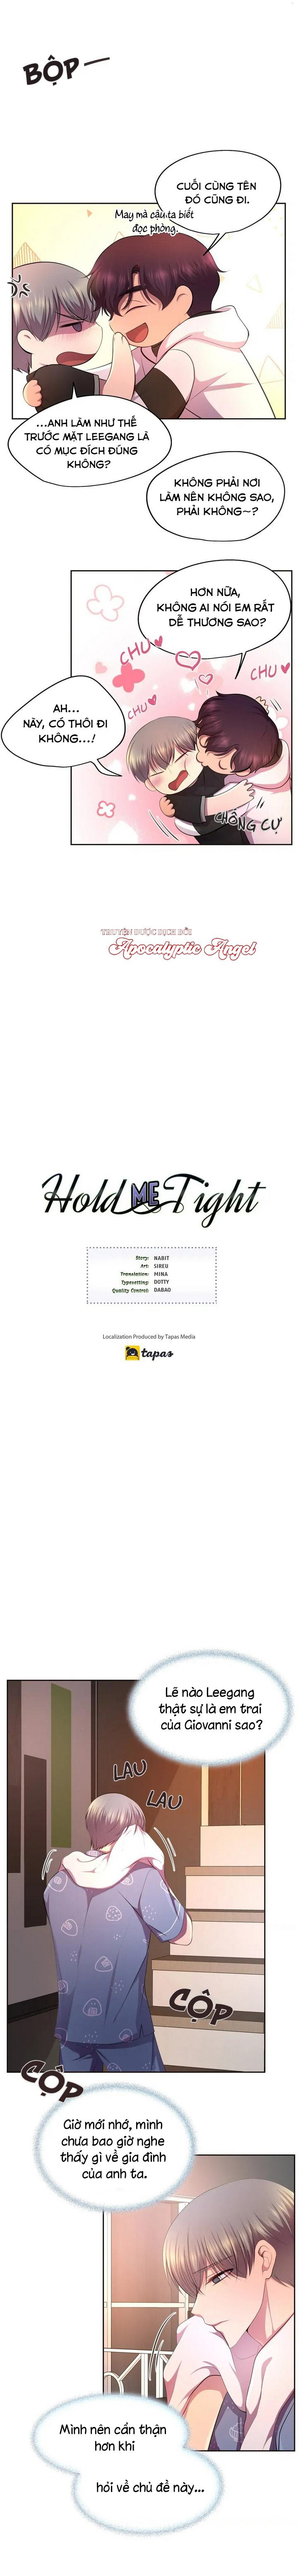 Giữ Em Thật Chặt (Hold Me Tight) Chapter 127 - Trang 6